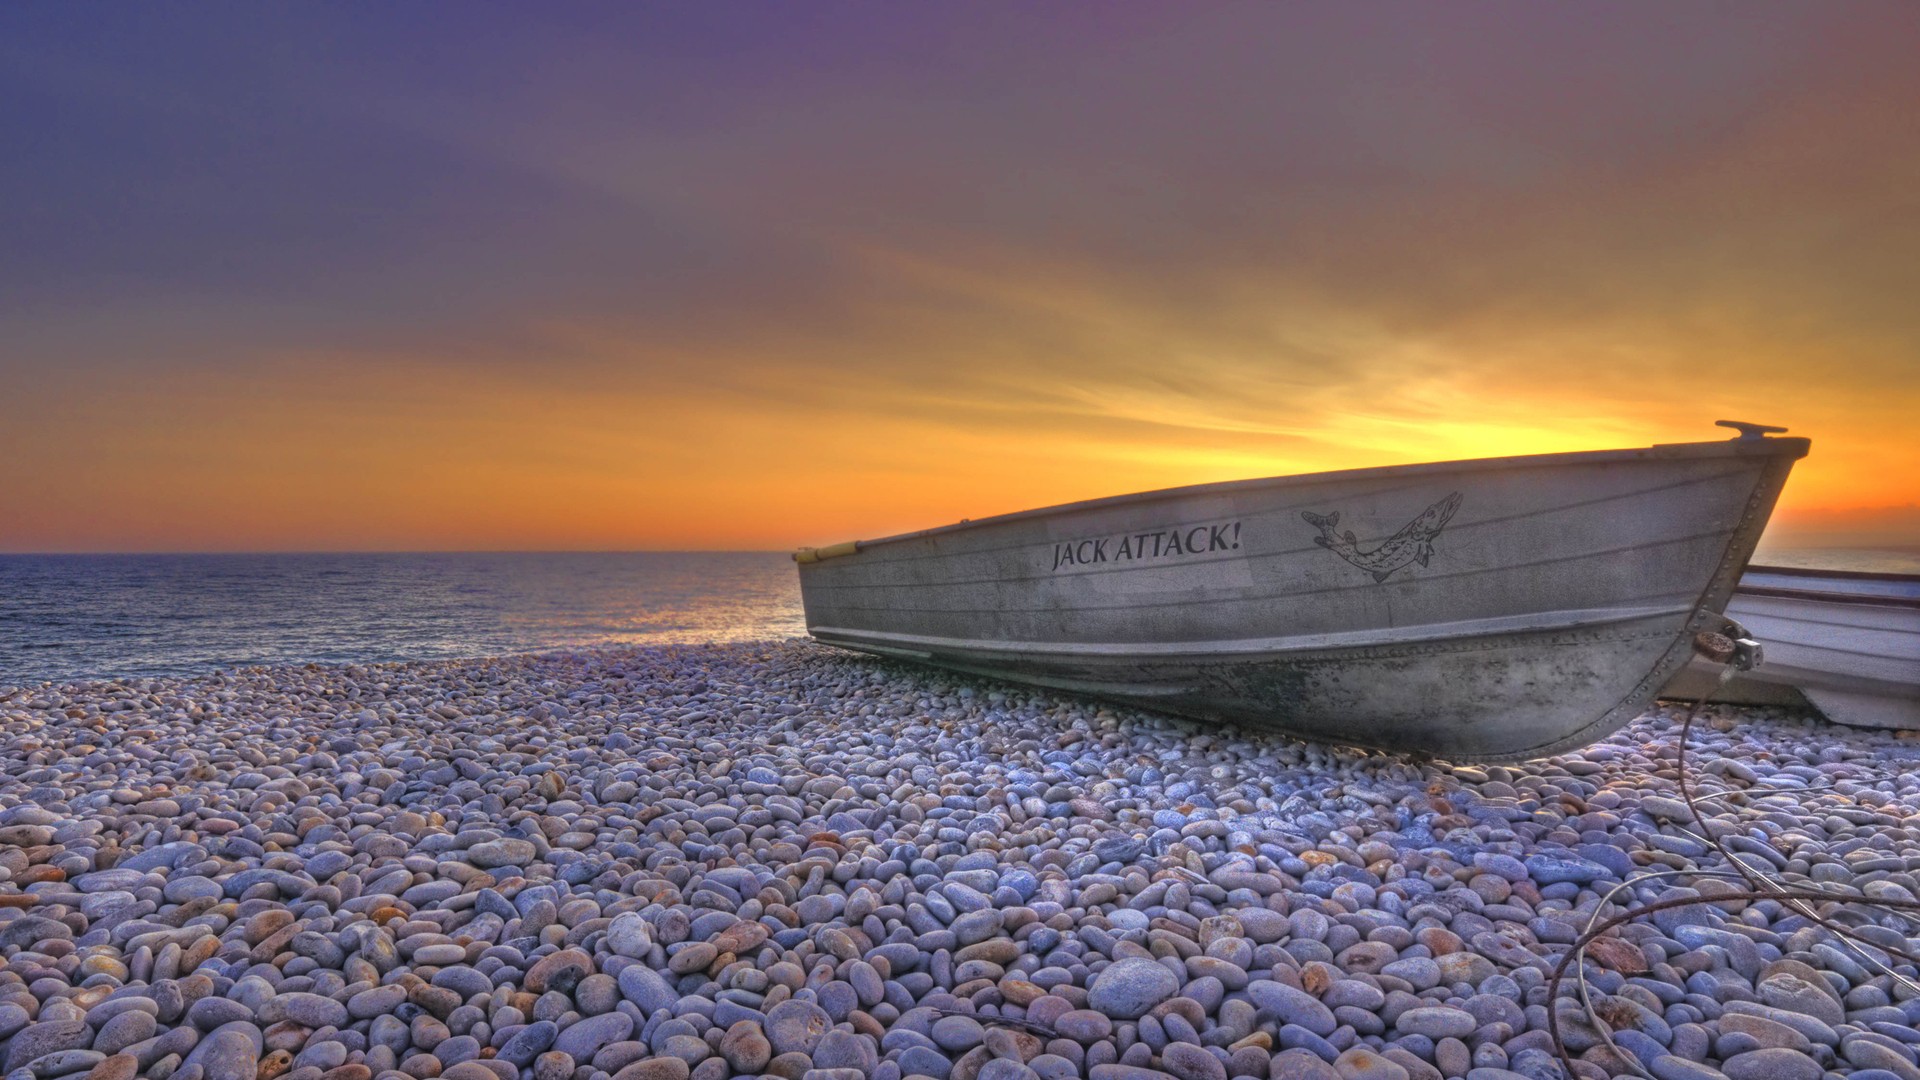 General 1920x1080 sky boat sea vehicle outdoors stones beach horizon sunlight